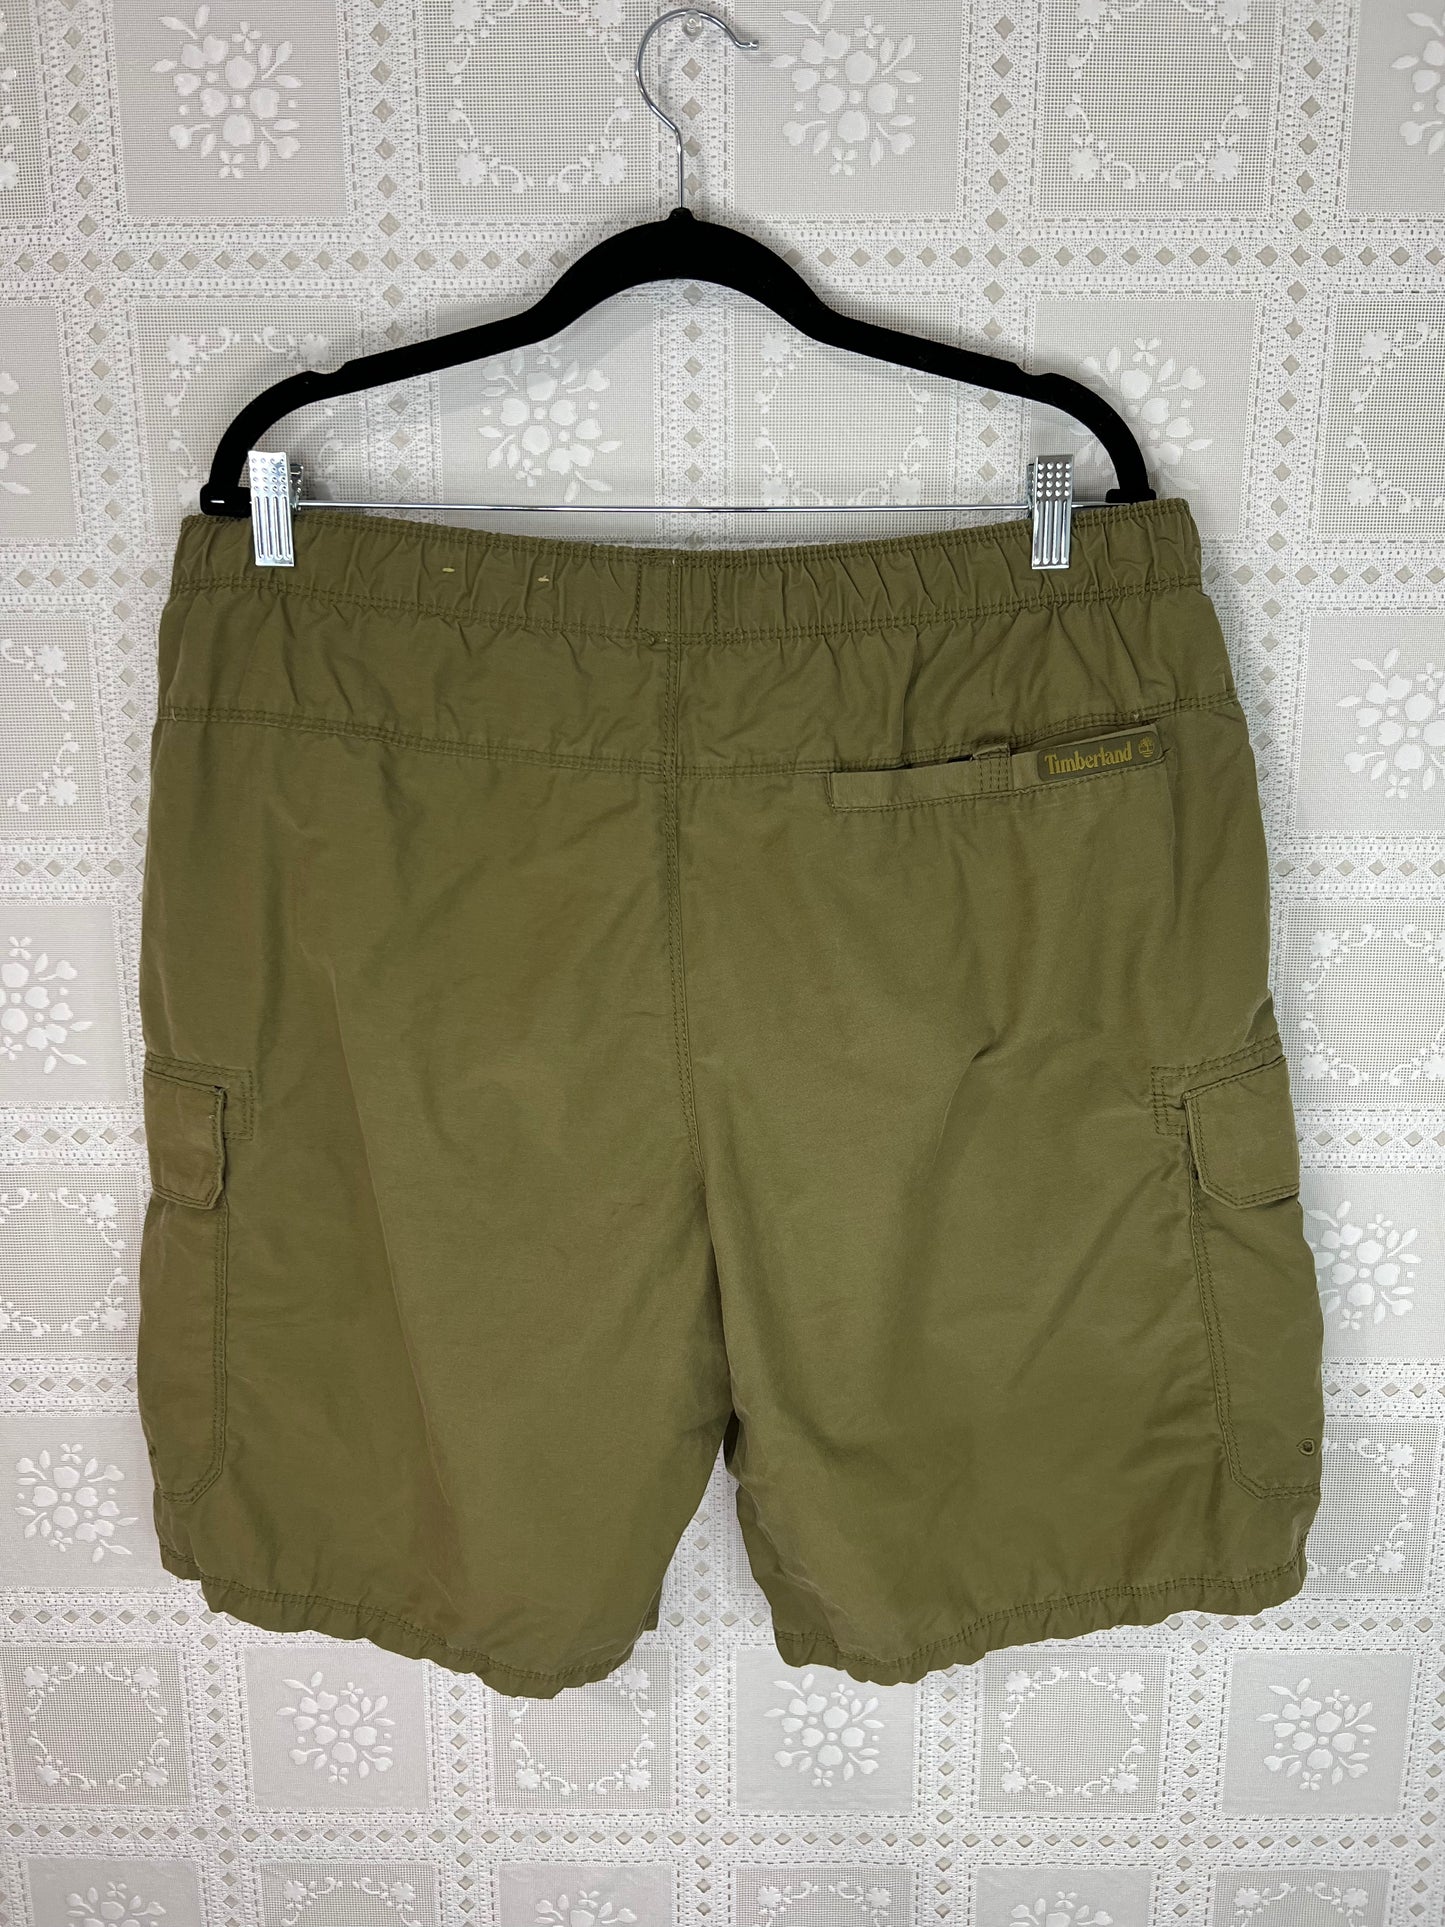 Timberland Men’s Hiking Shorts XL